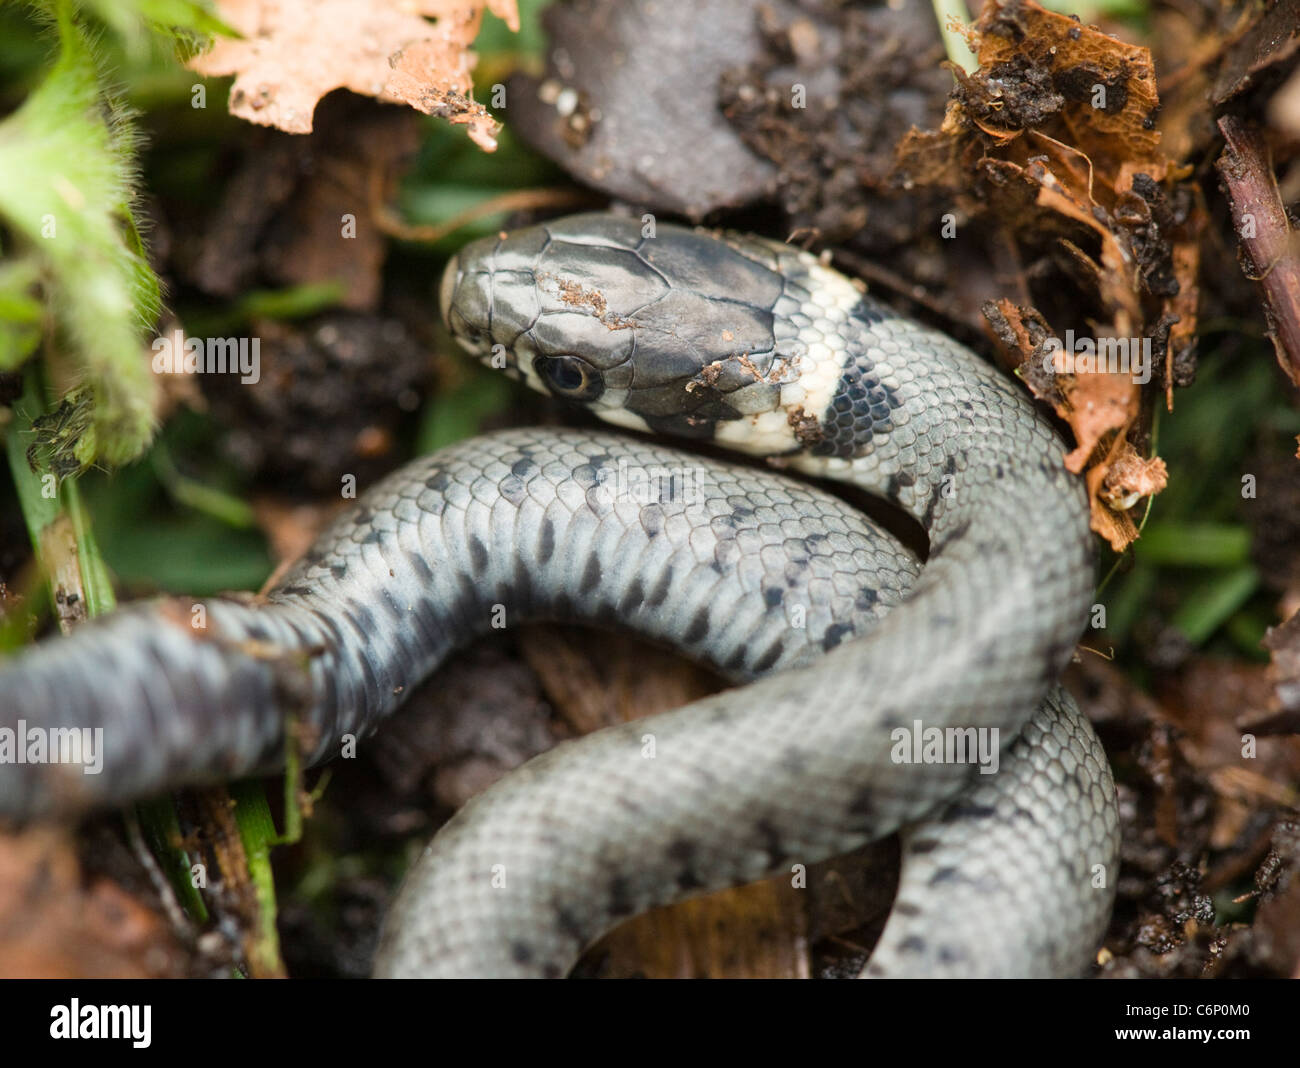 Young grass snake, Natrix natrix, just hatched. UK. Stock Photo